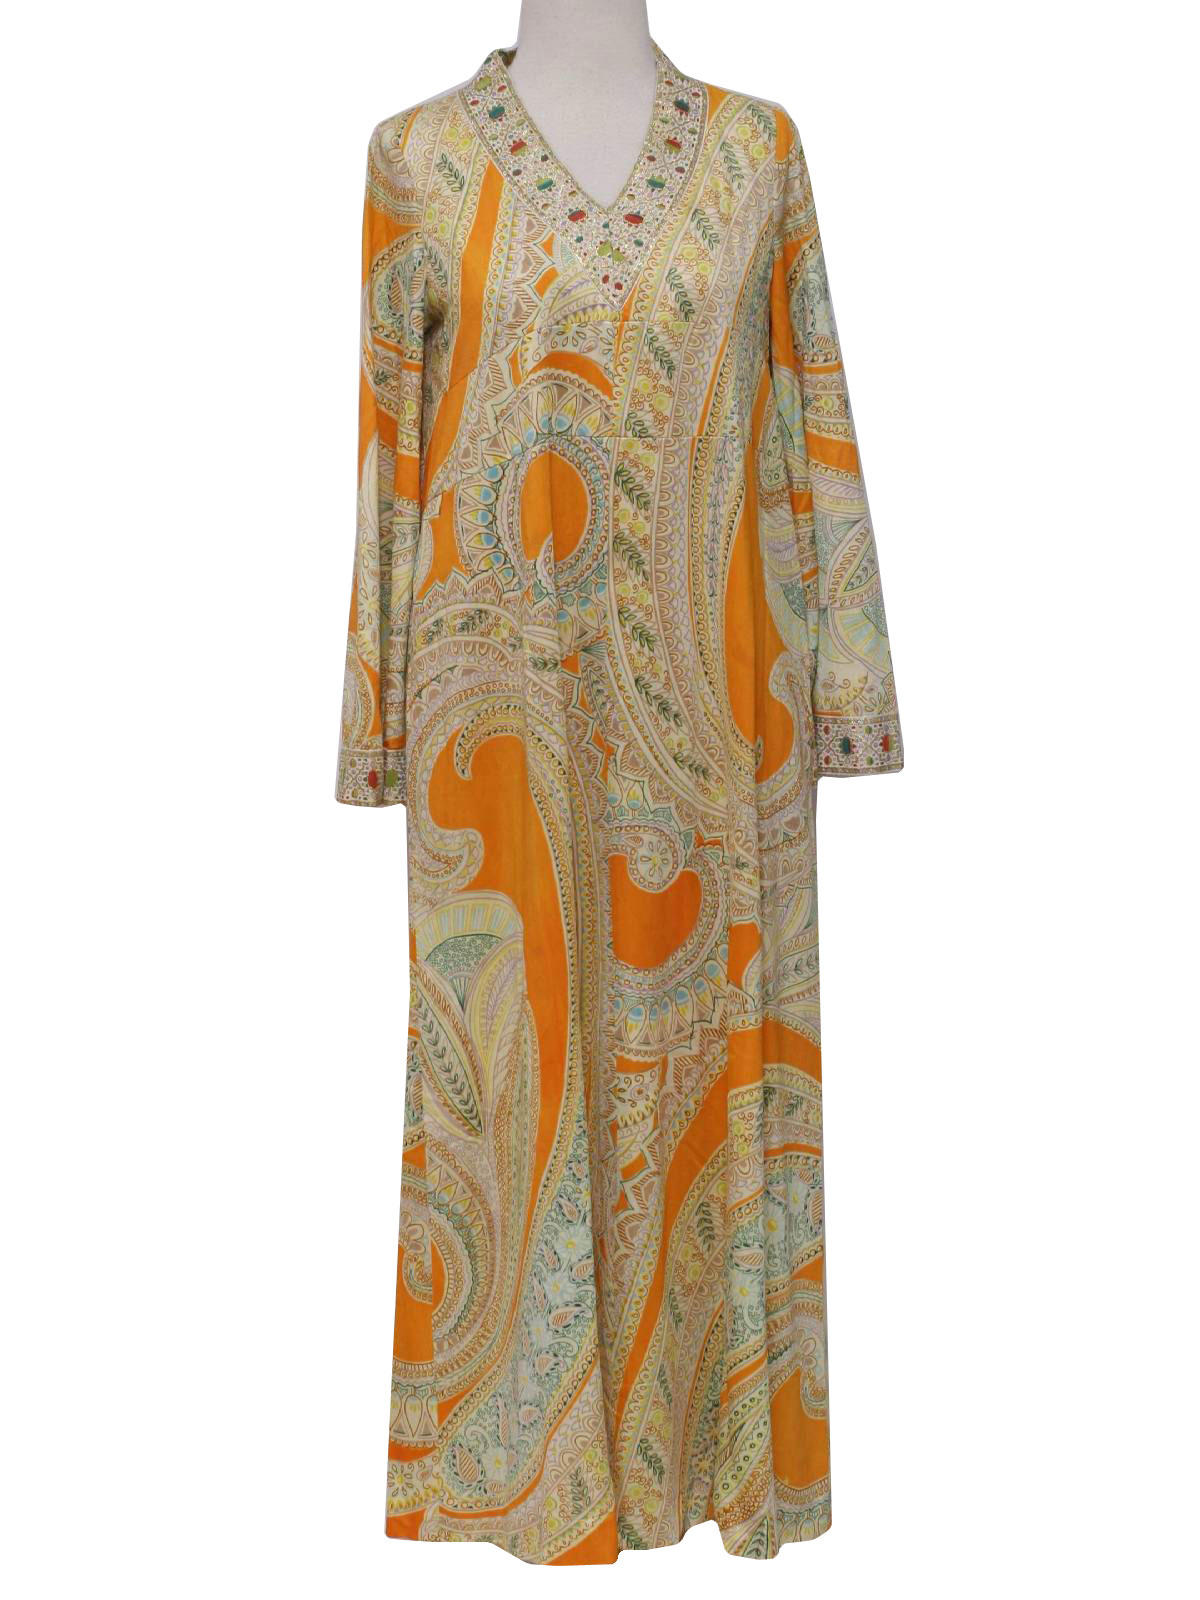 Saks Fifth Avenue 1970s Vintage Hippie Dress: 70s -Saks Fifth Avenue ...